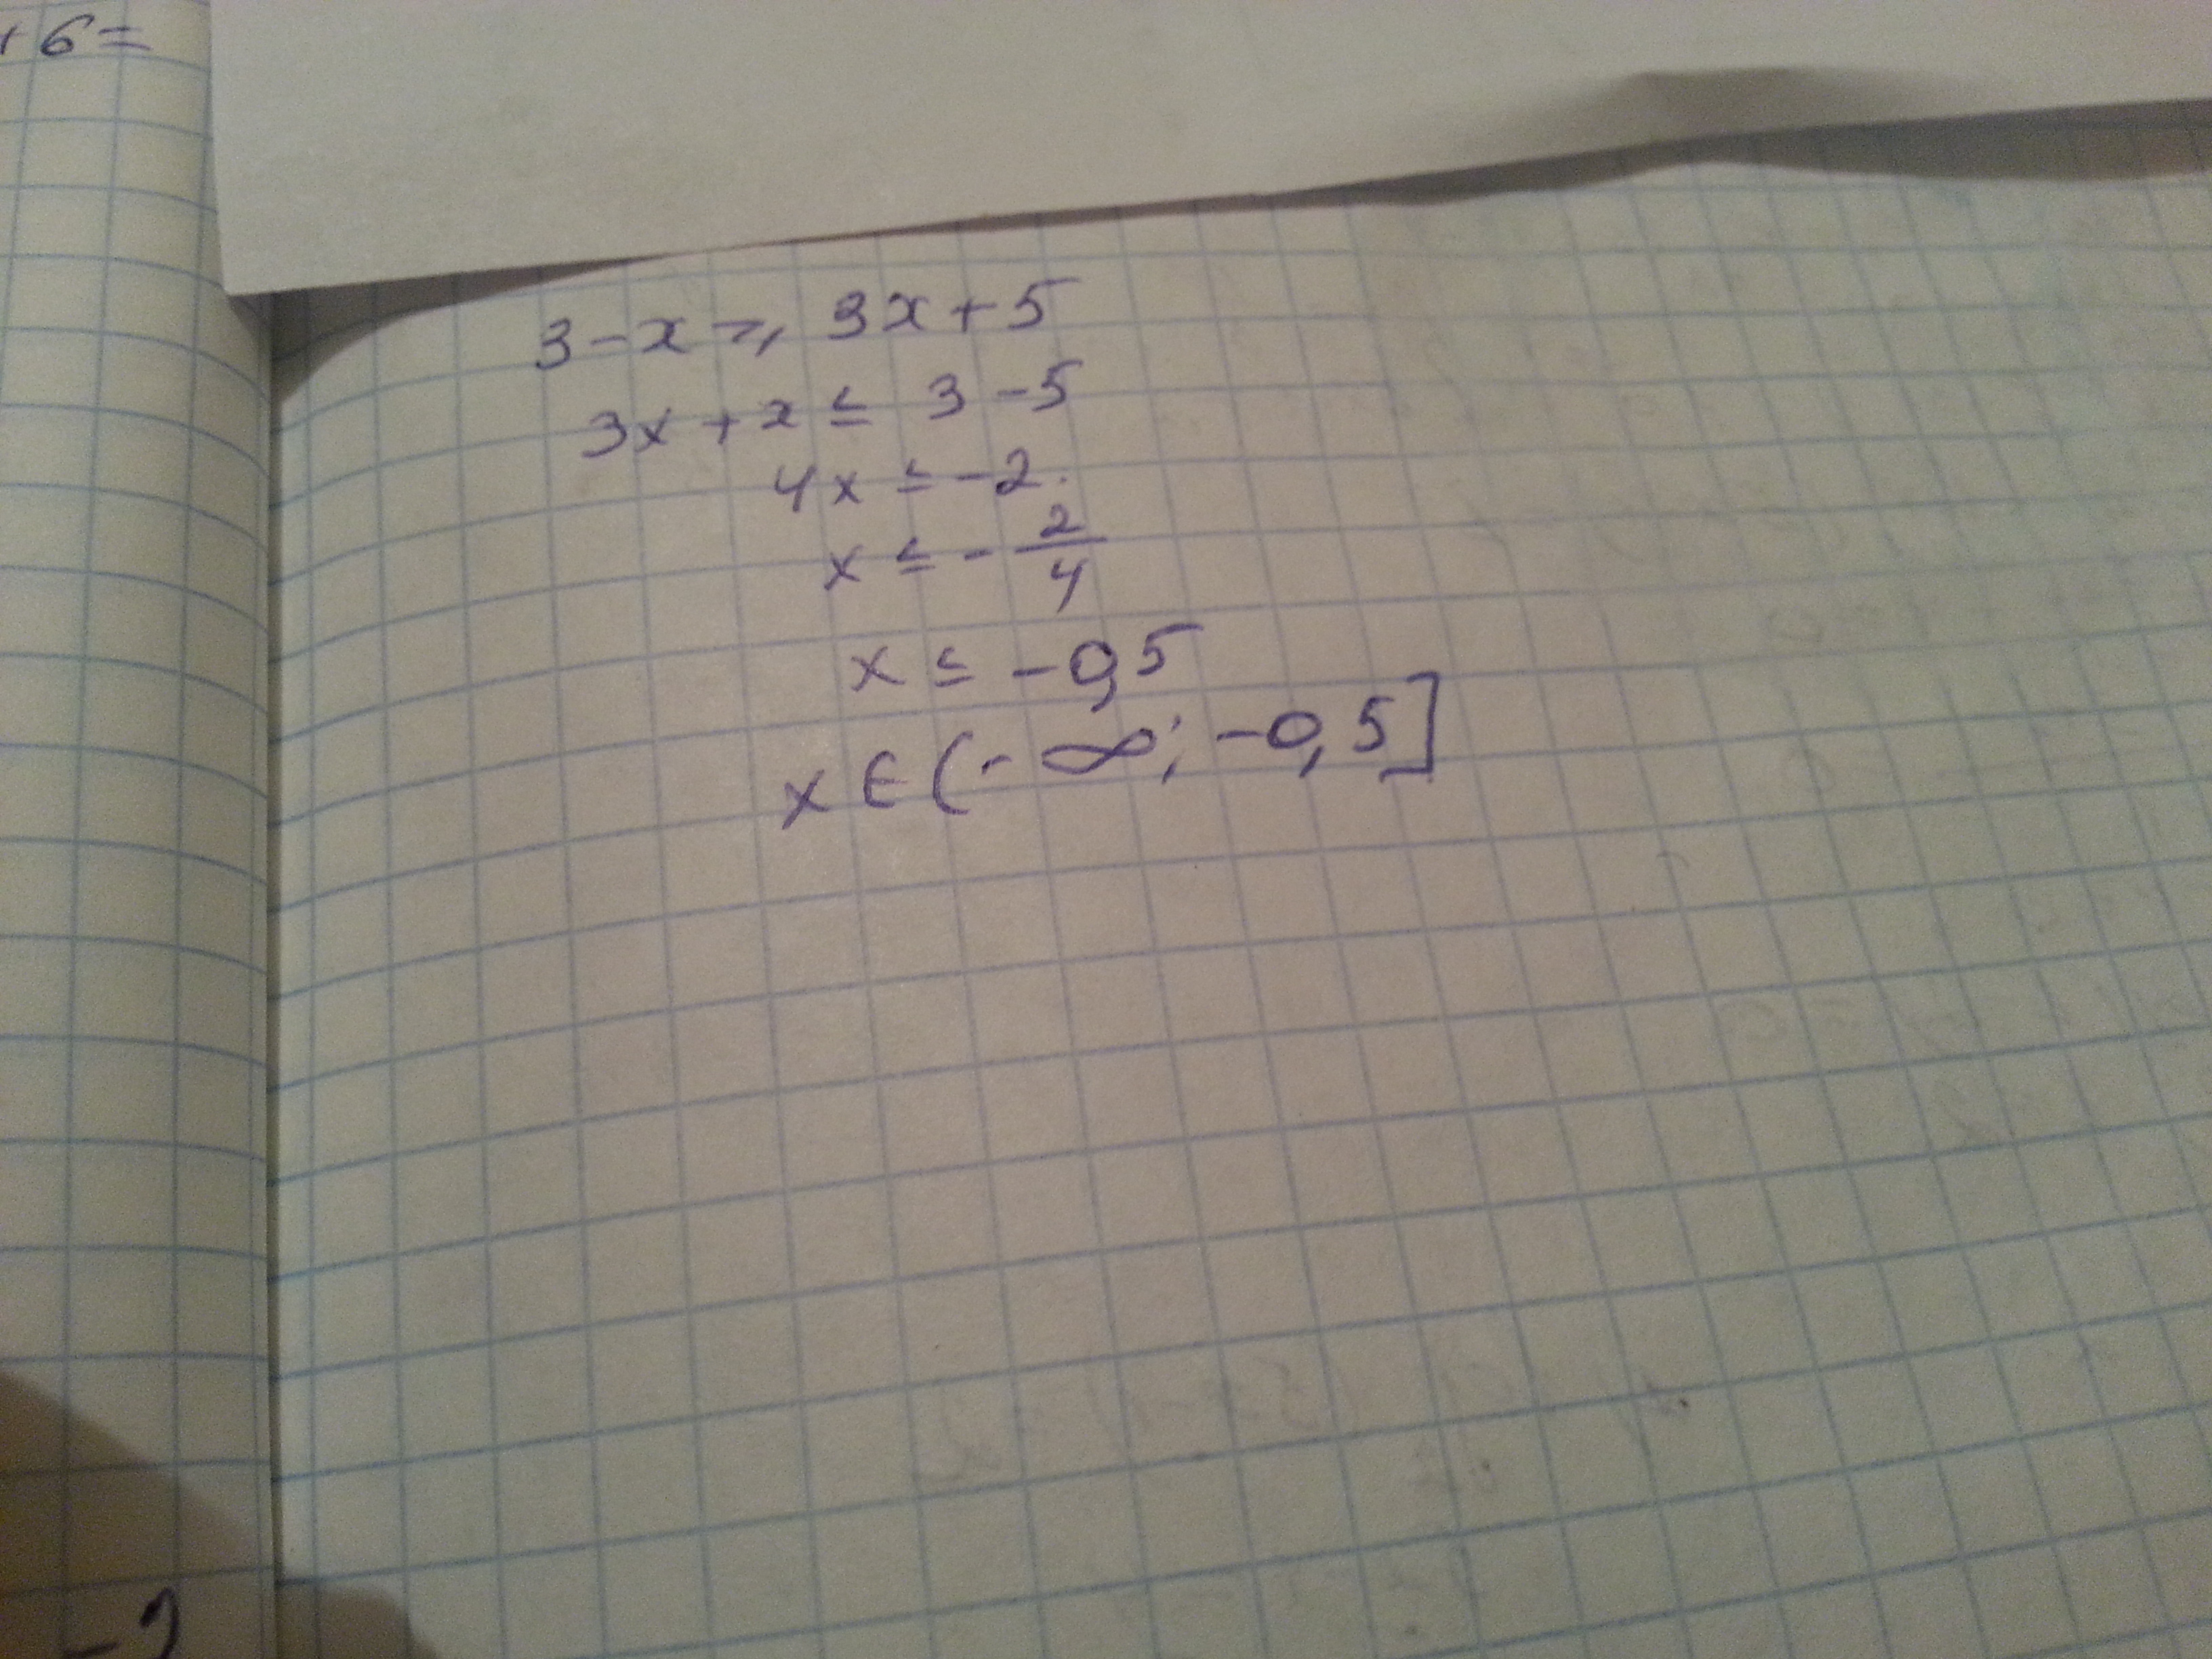 3х 5 10 решение. 3x-(x-3)<=5x. Укажите решение неравенства -3-5x< x+3. 3-X 3x+5 решение неравенства. 3-X>3x+5 укажите решение.